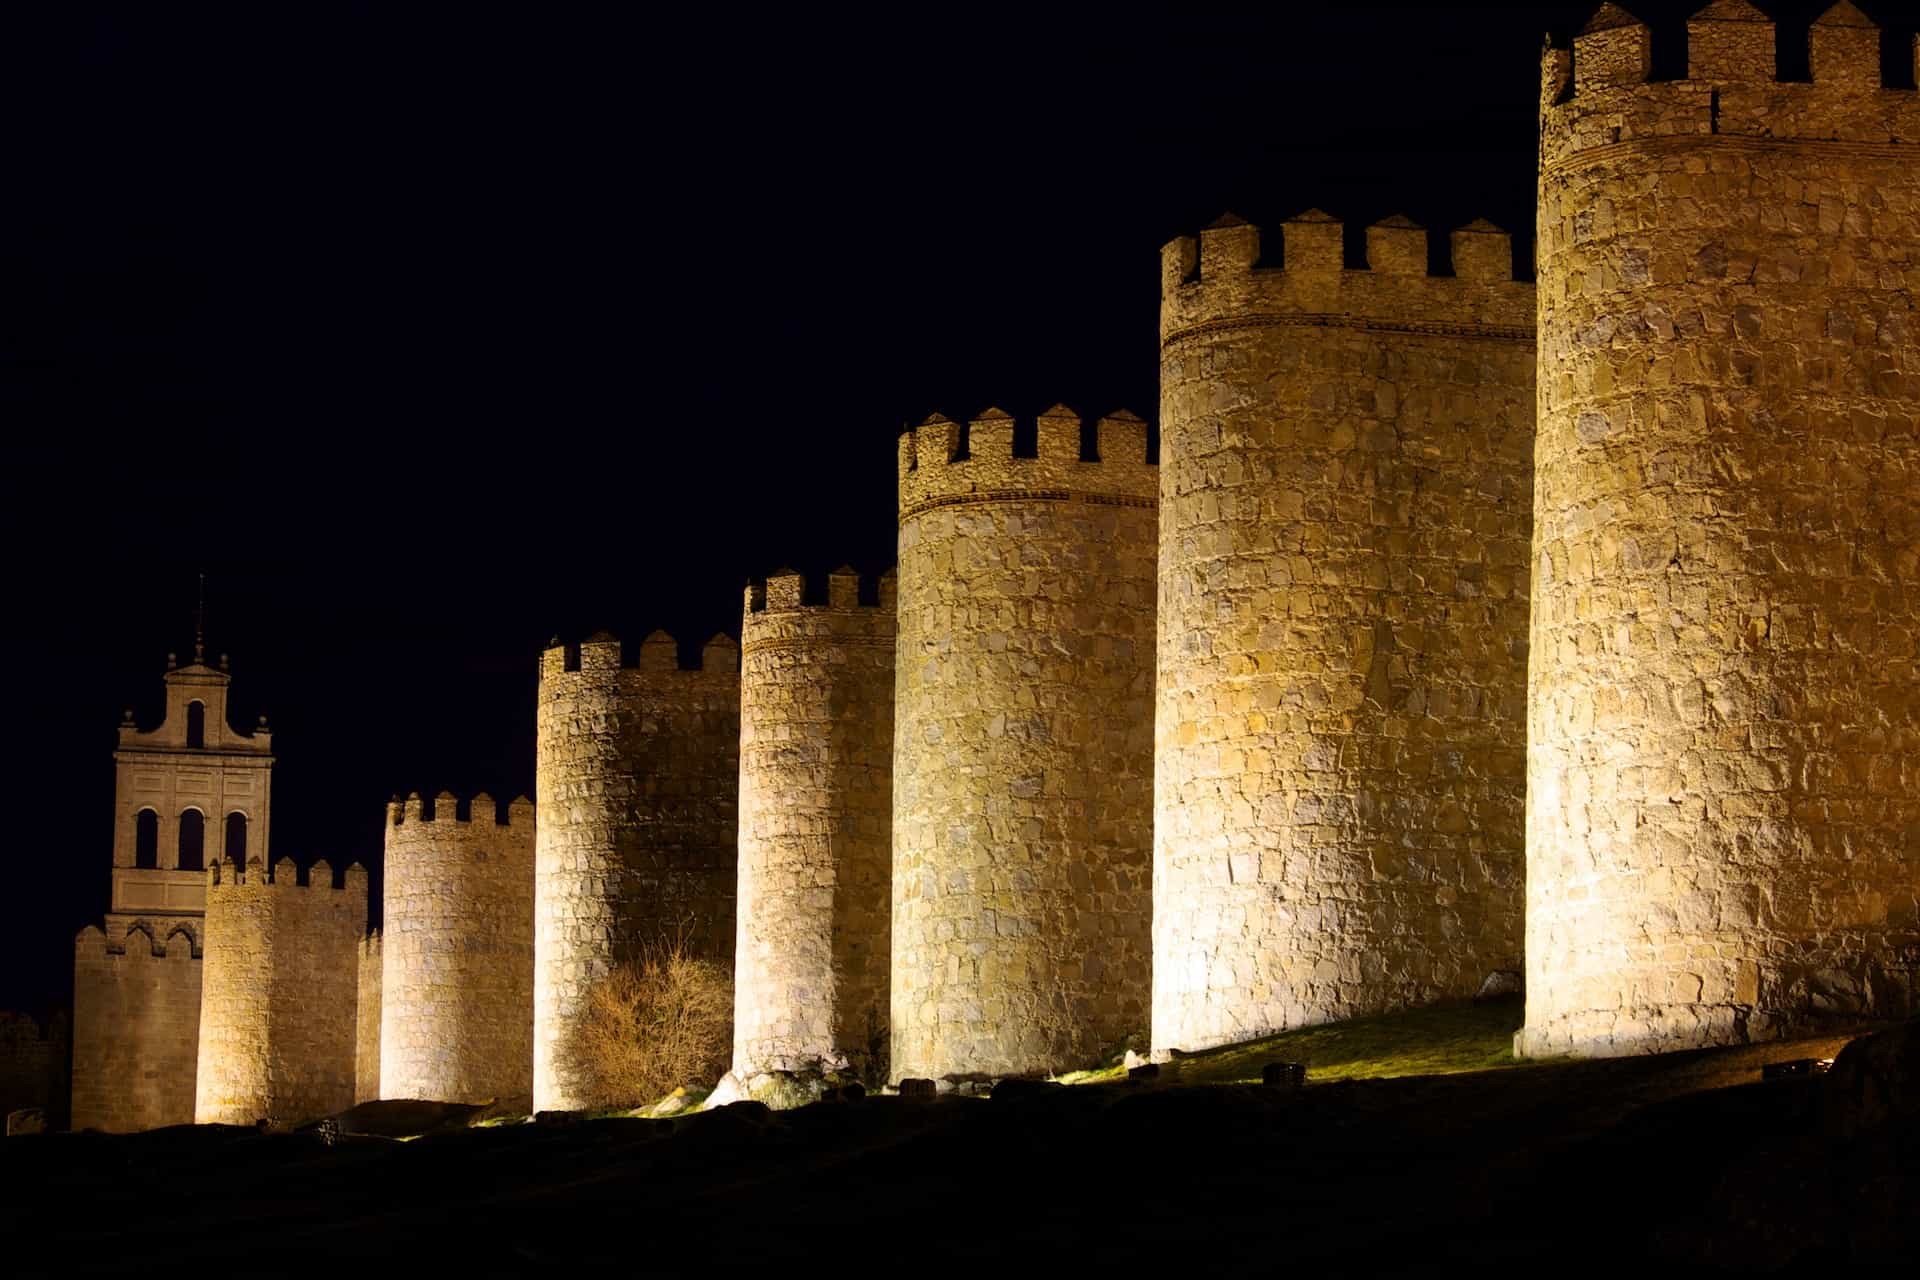 A wall of castle-like structures in Avila, Spain.